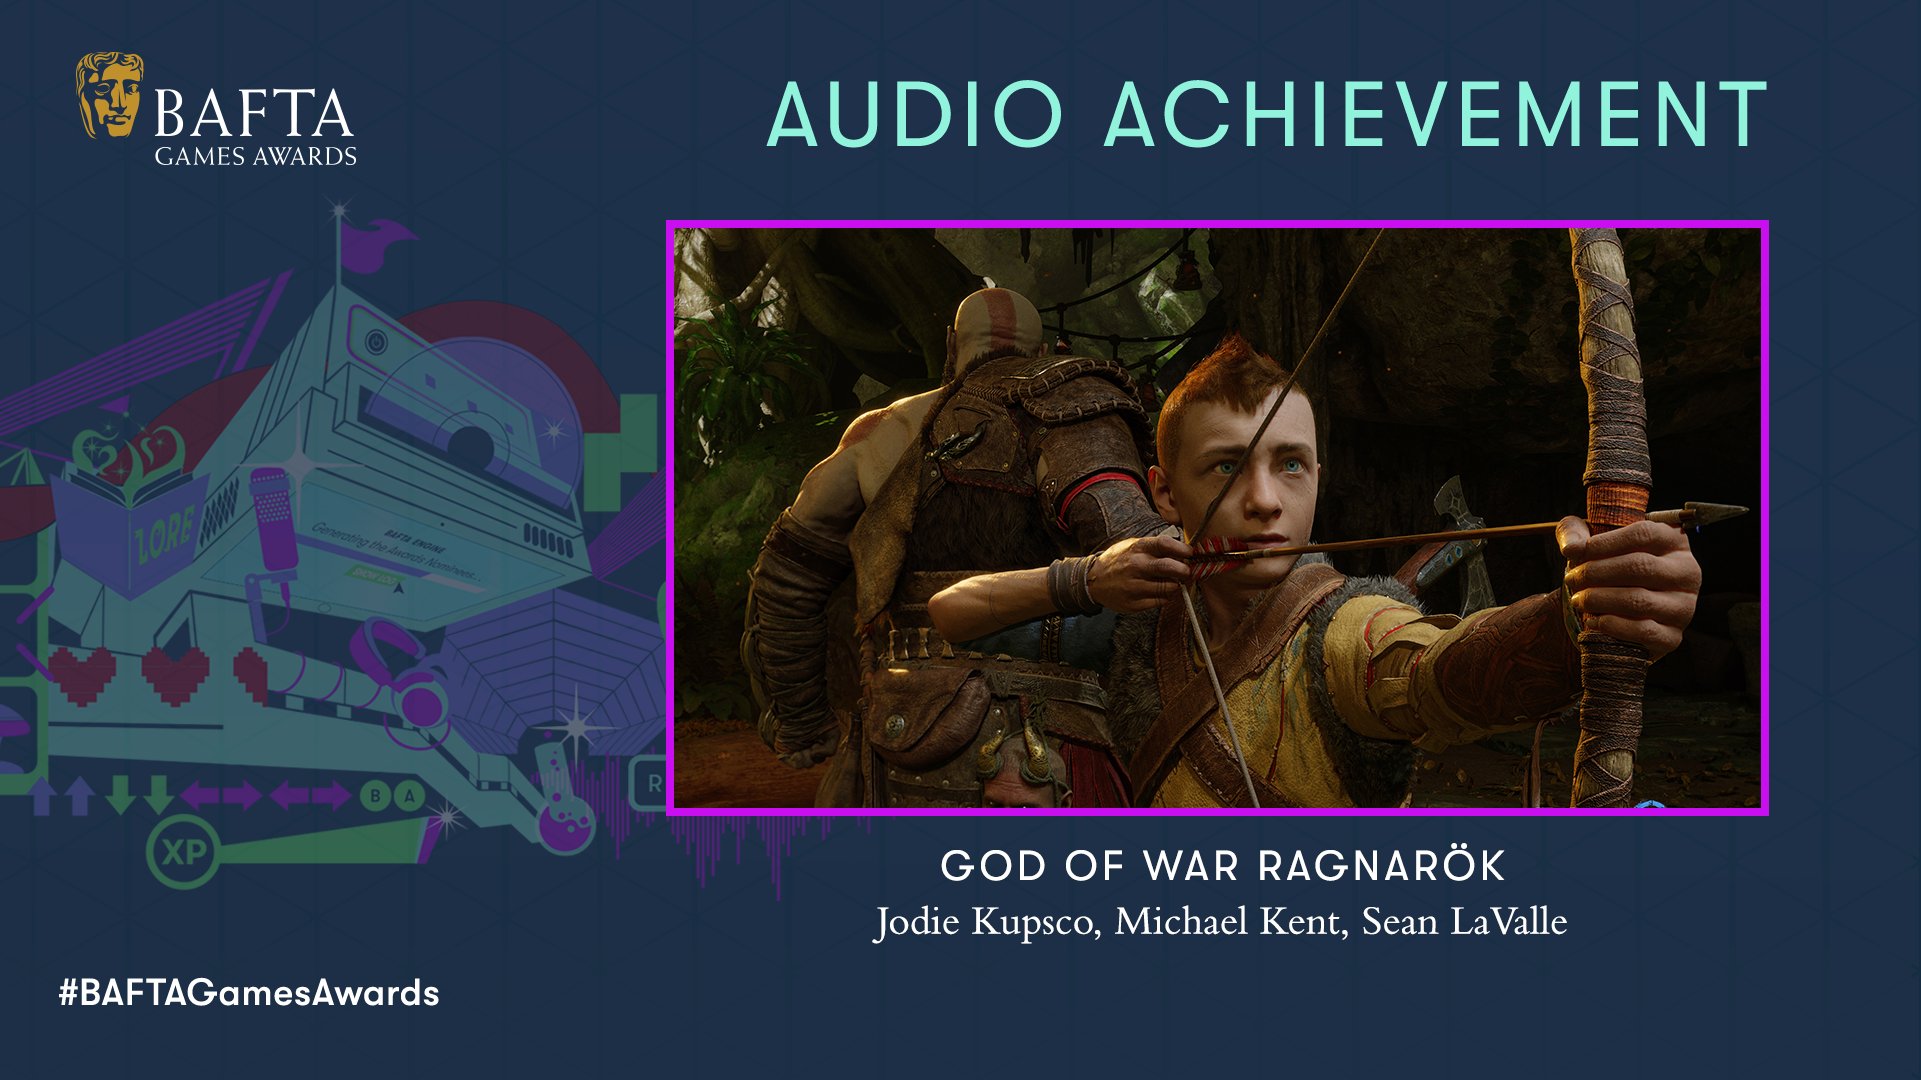 Grace Pan - God of War Ragnarok Animation Reel on Vimeo